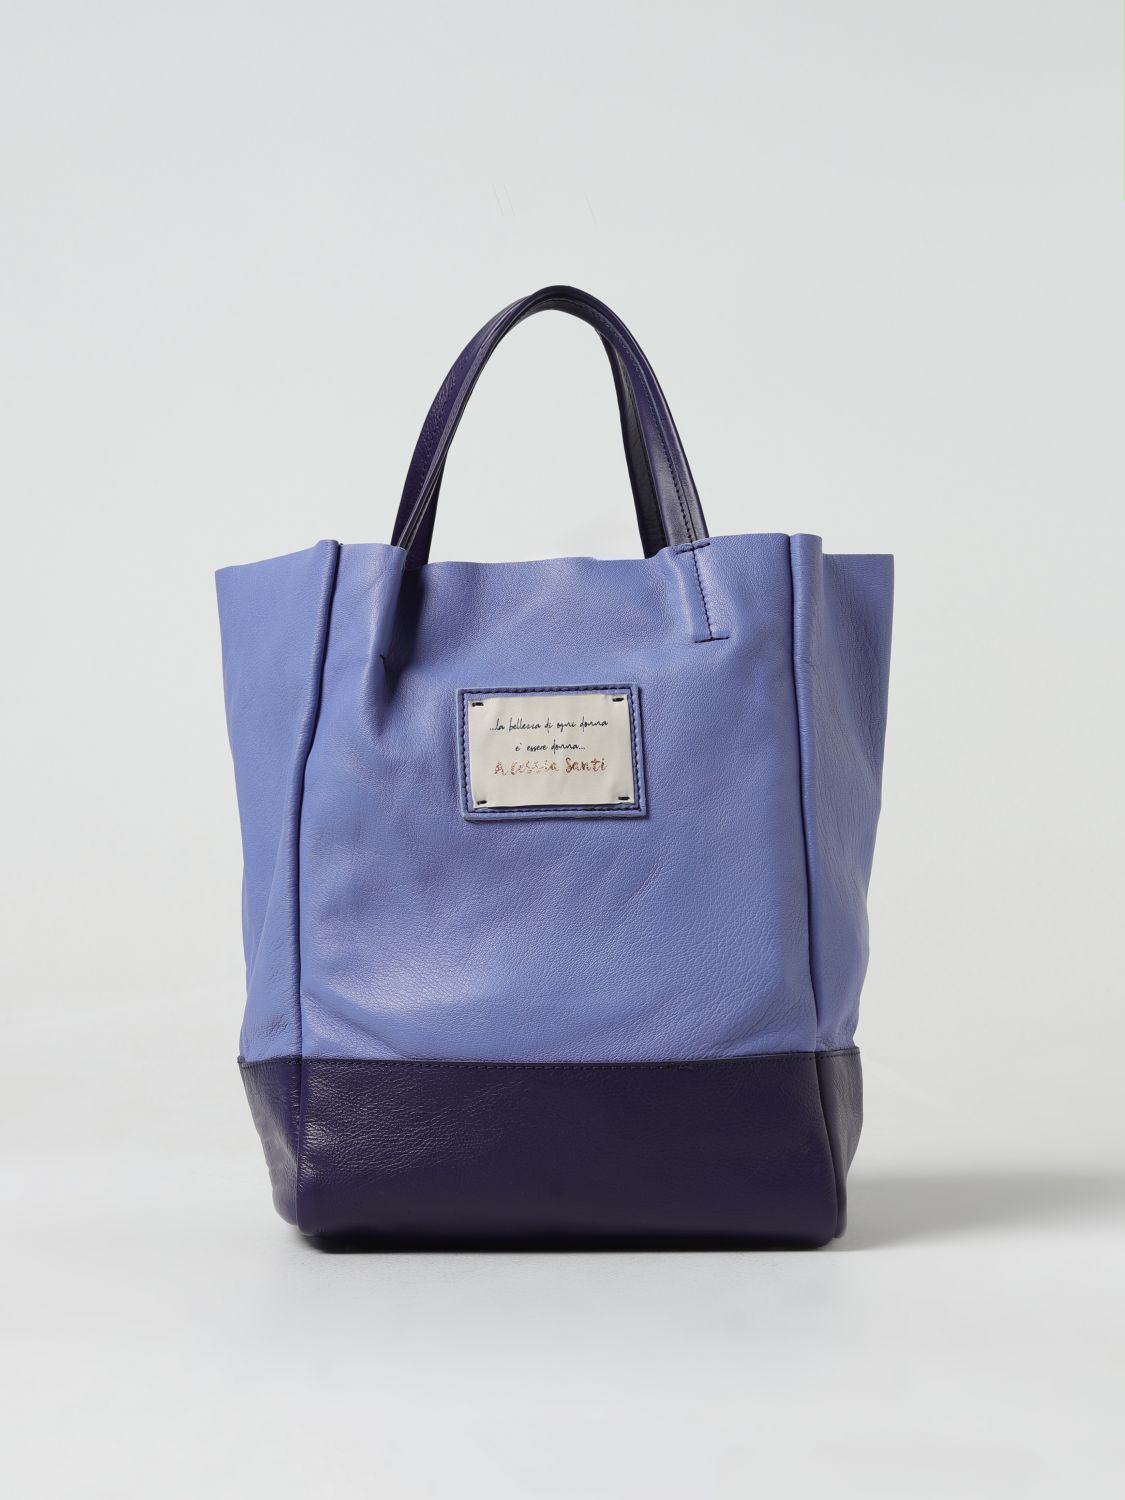 Alessia Santi Handbag ALESSIA SANTI Woman colour Violet